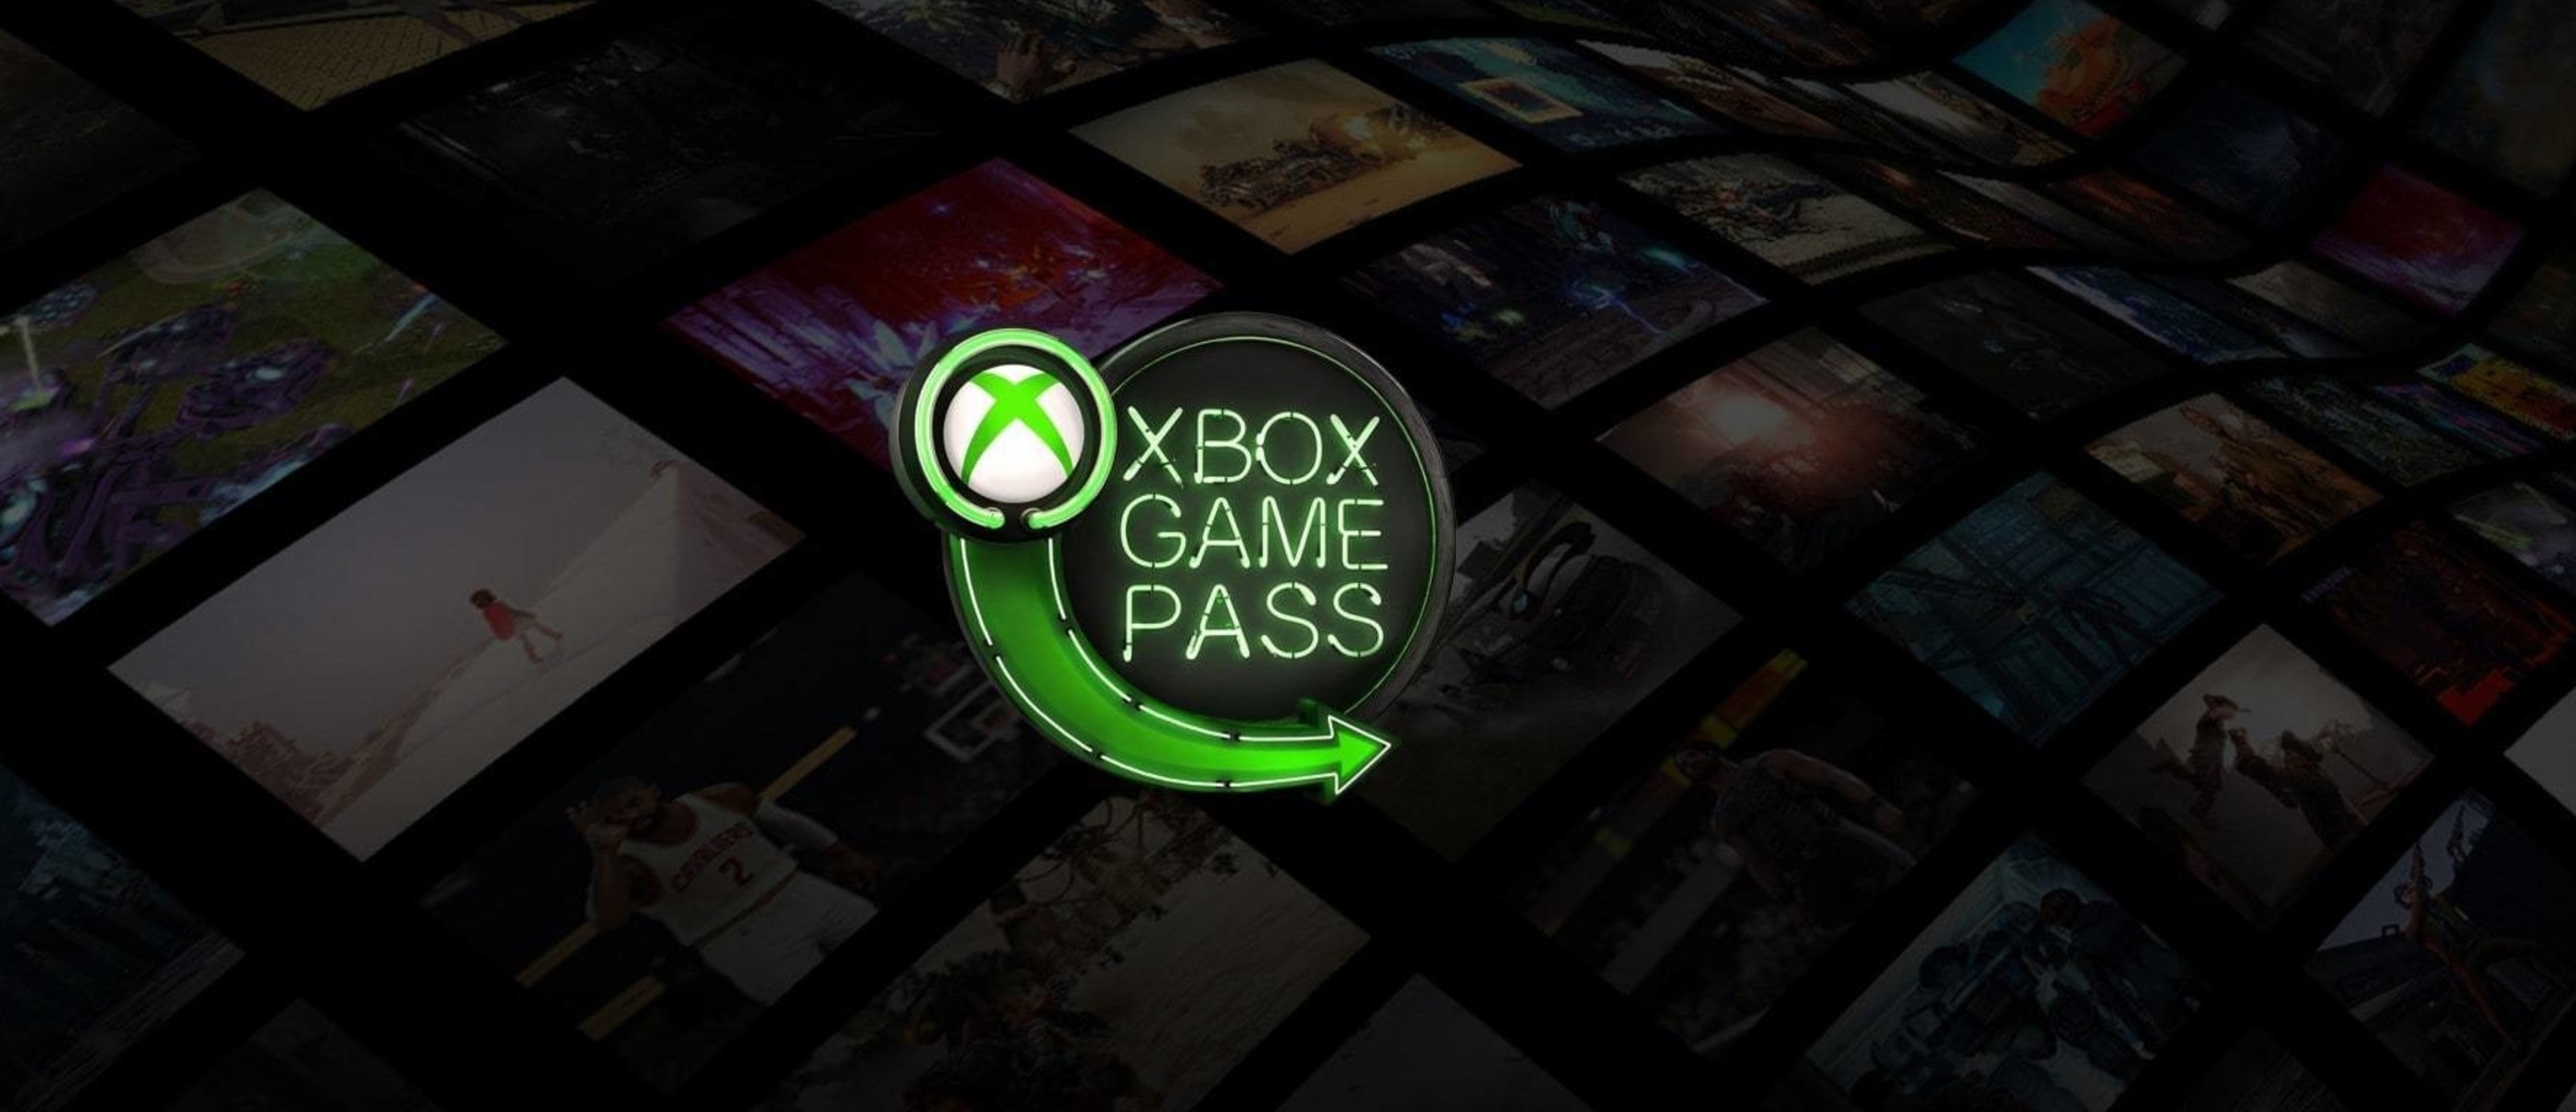 Xbox game pass apk